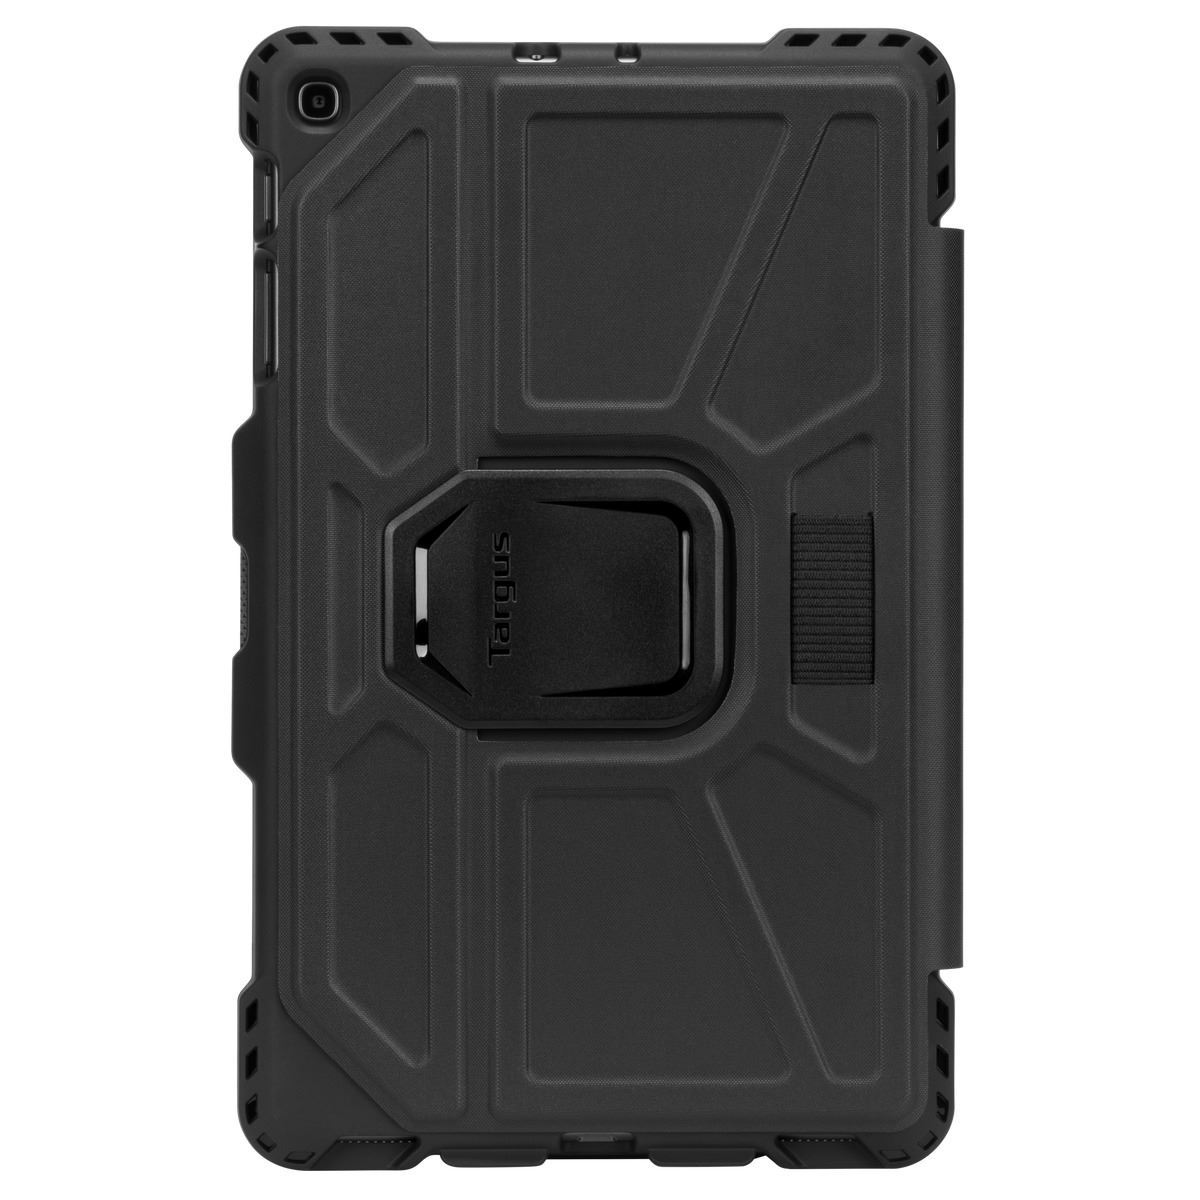 Pro-Tek Rotating case for Samsung Galaxy Tab A 10.1" - Black